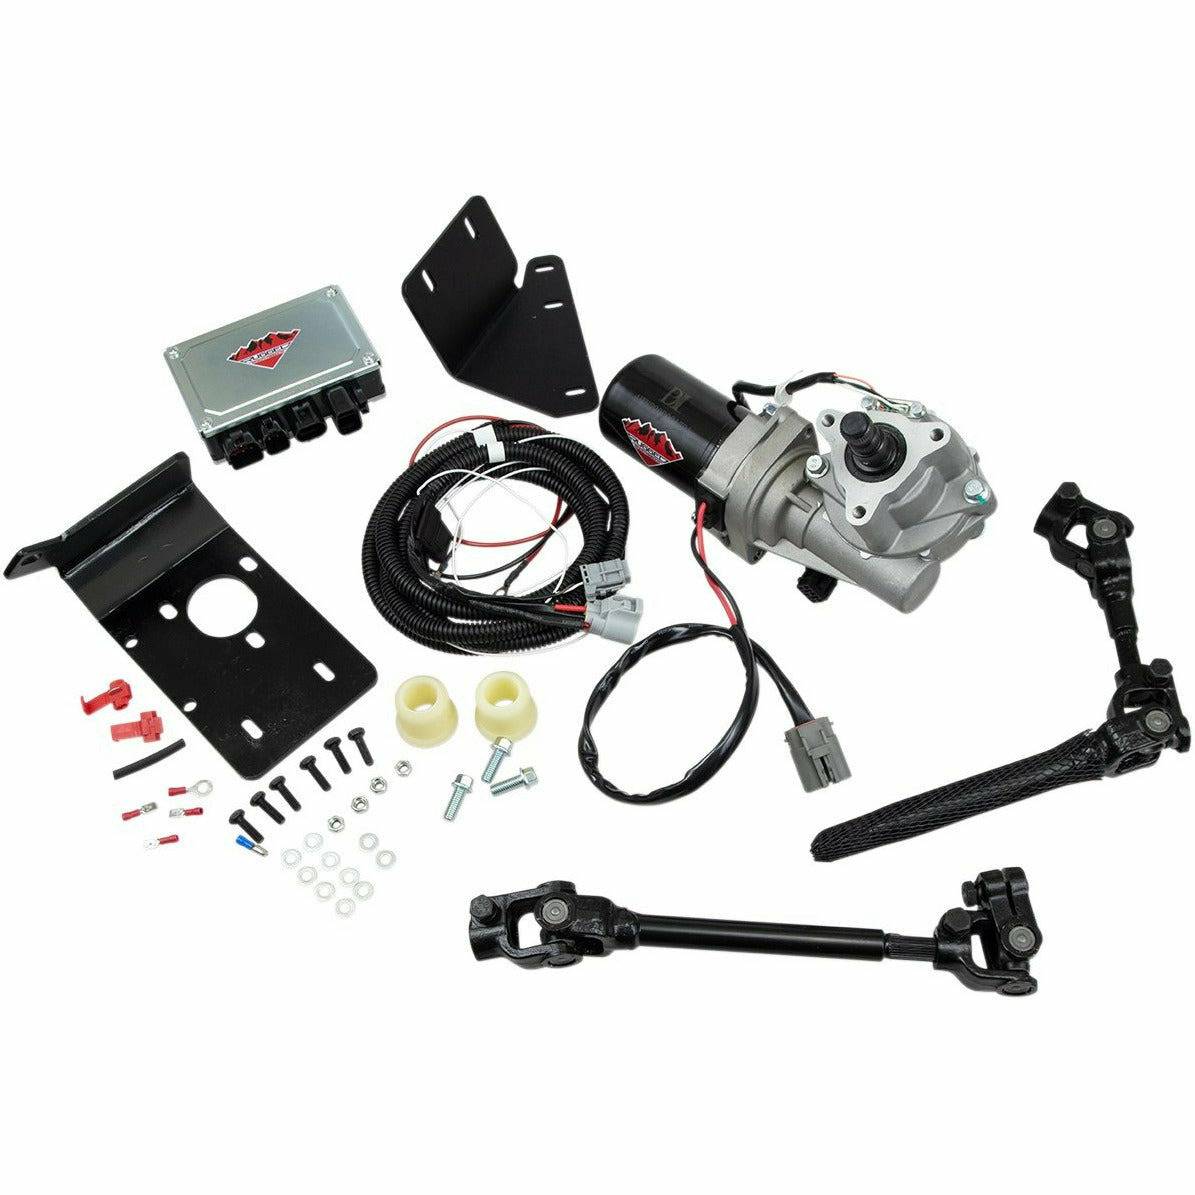 Moose Utility Polaris RZR 800 Power Steering Kit